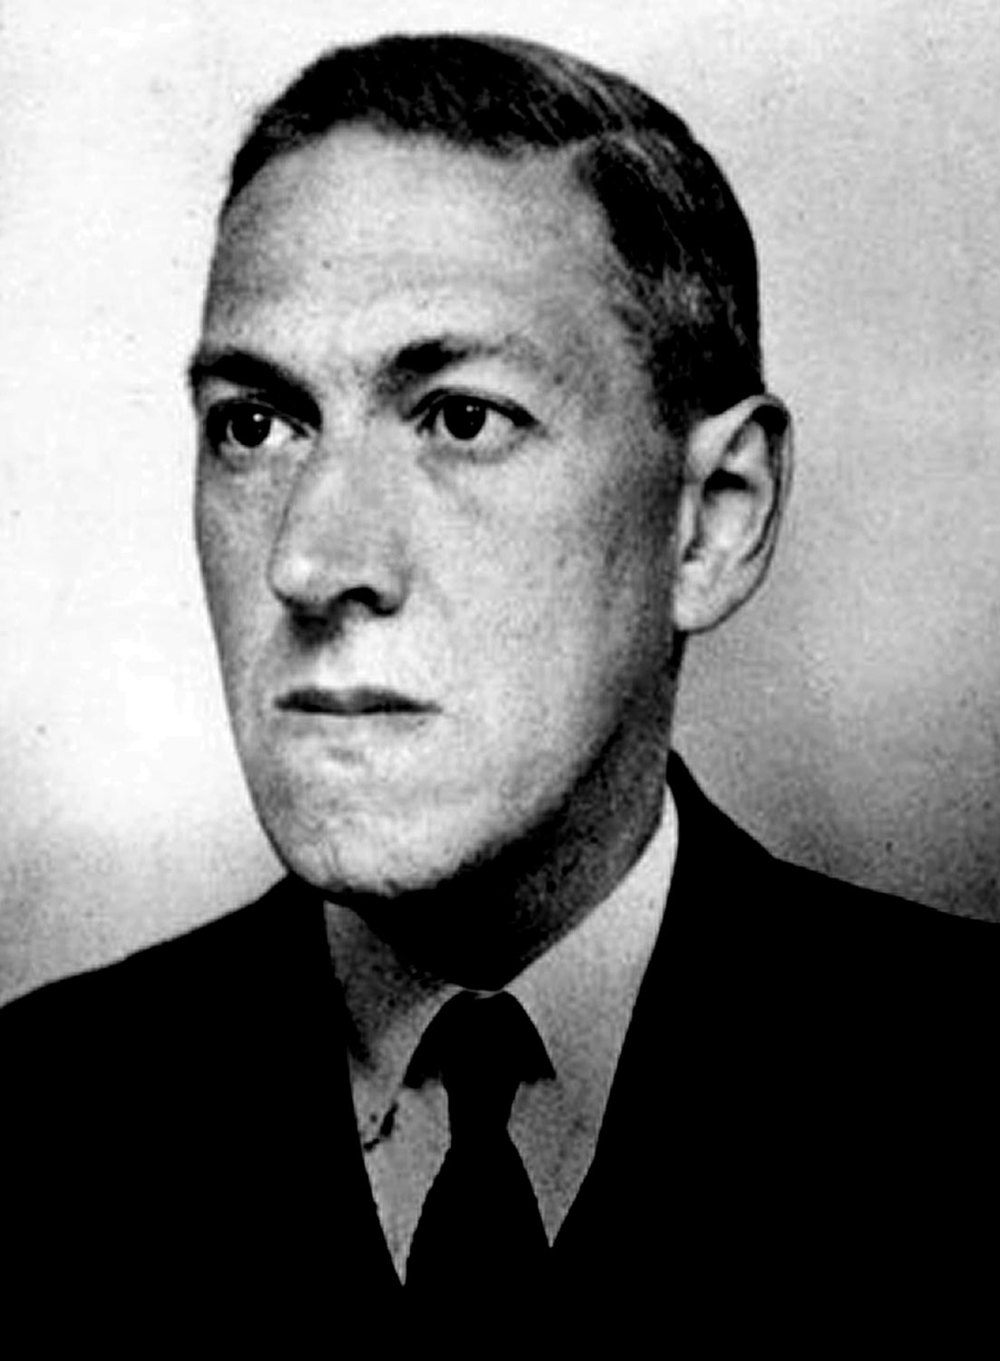 H. Ph. Lovecraft